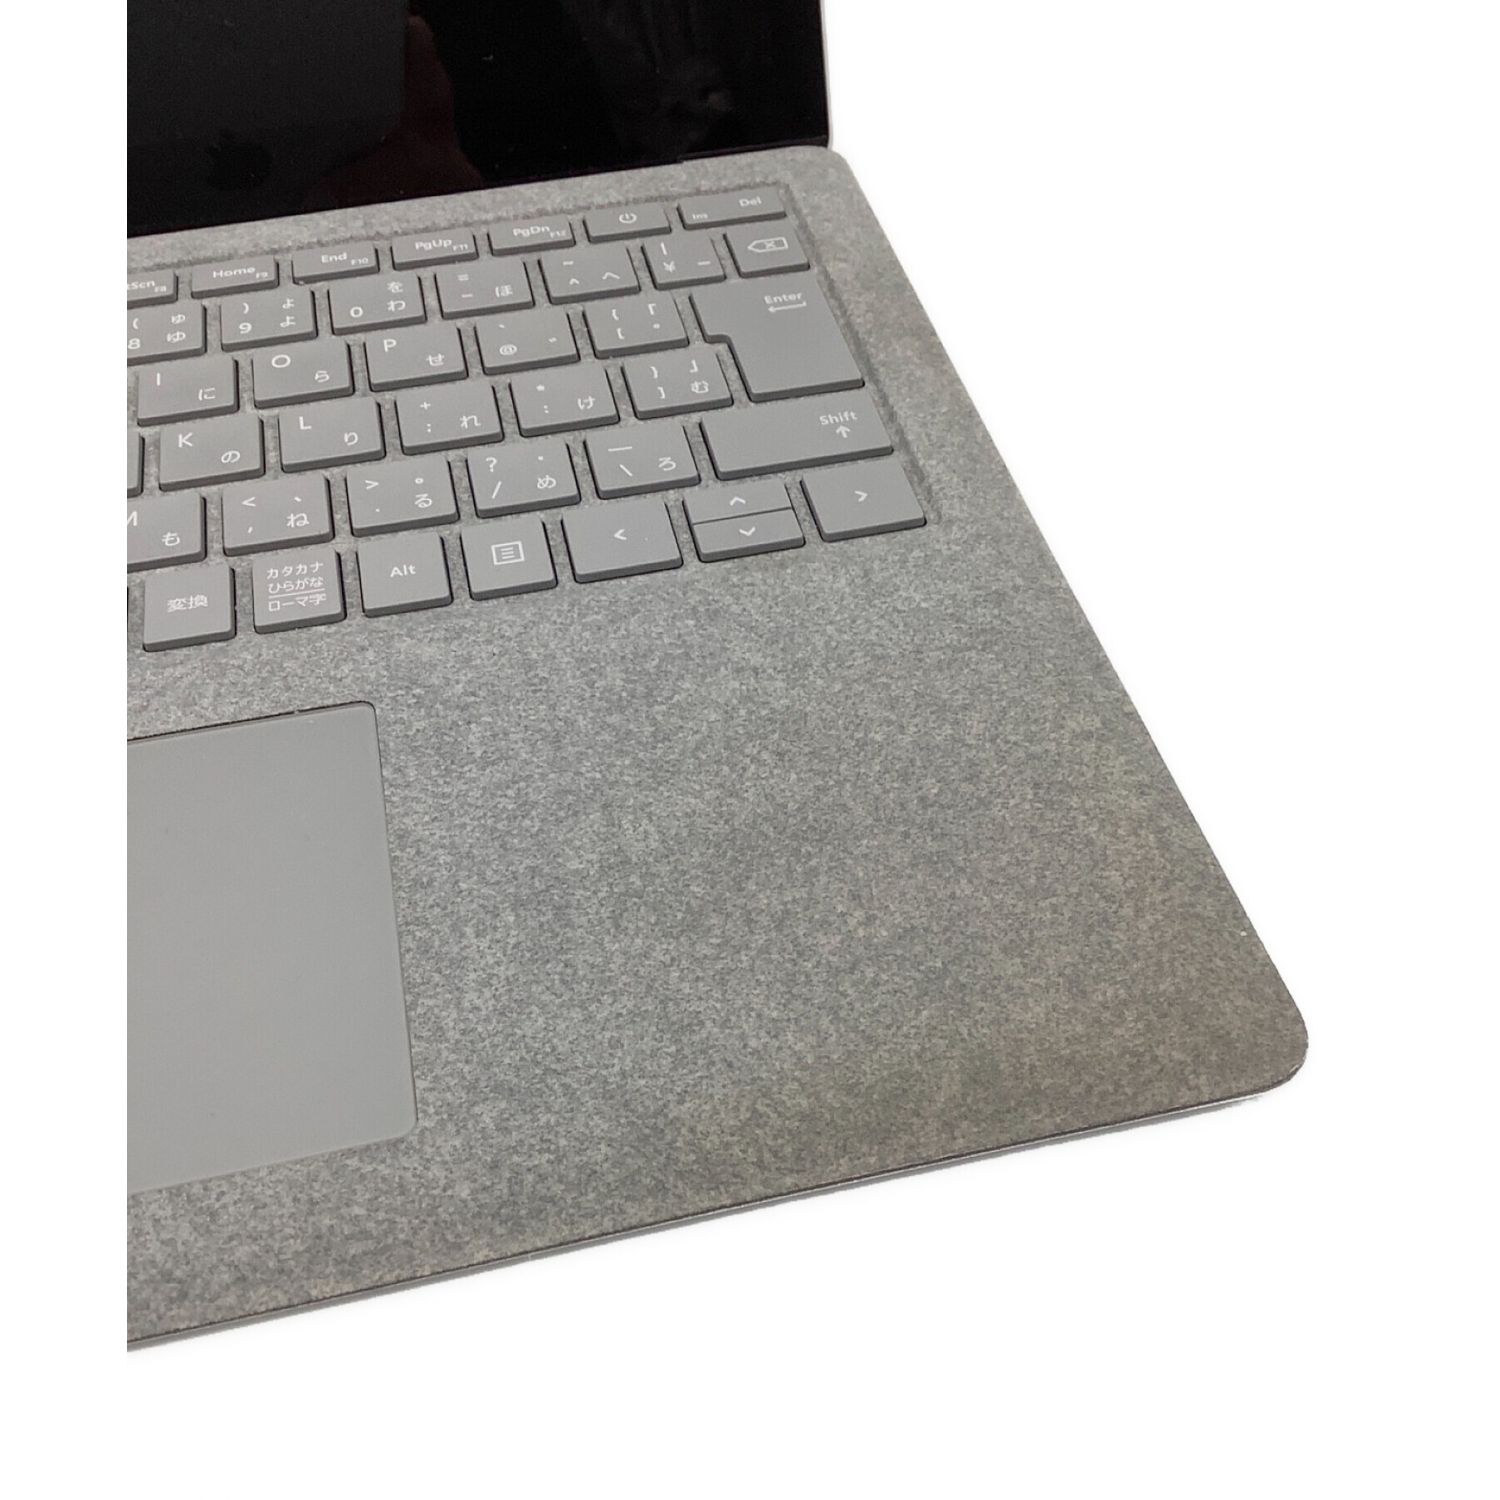 Microsoft (マイクロソフト) Surface Laptop 1769 Core i5 メモリ:8GB 